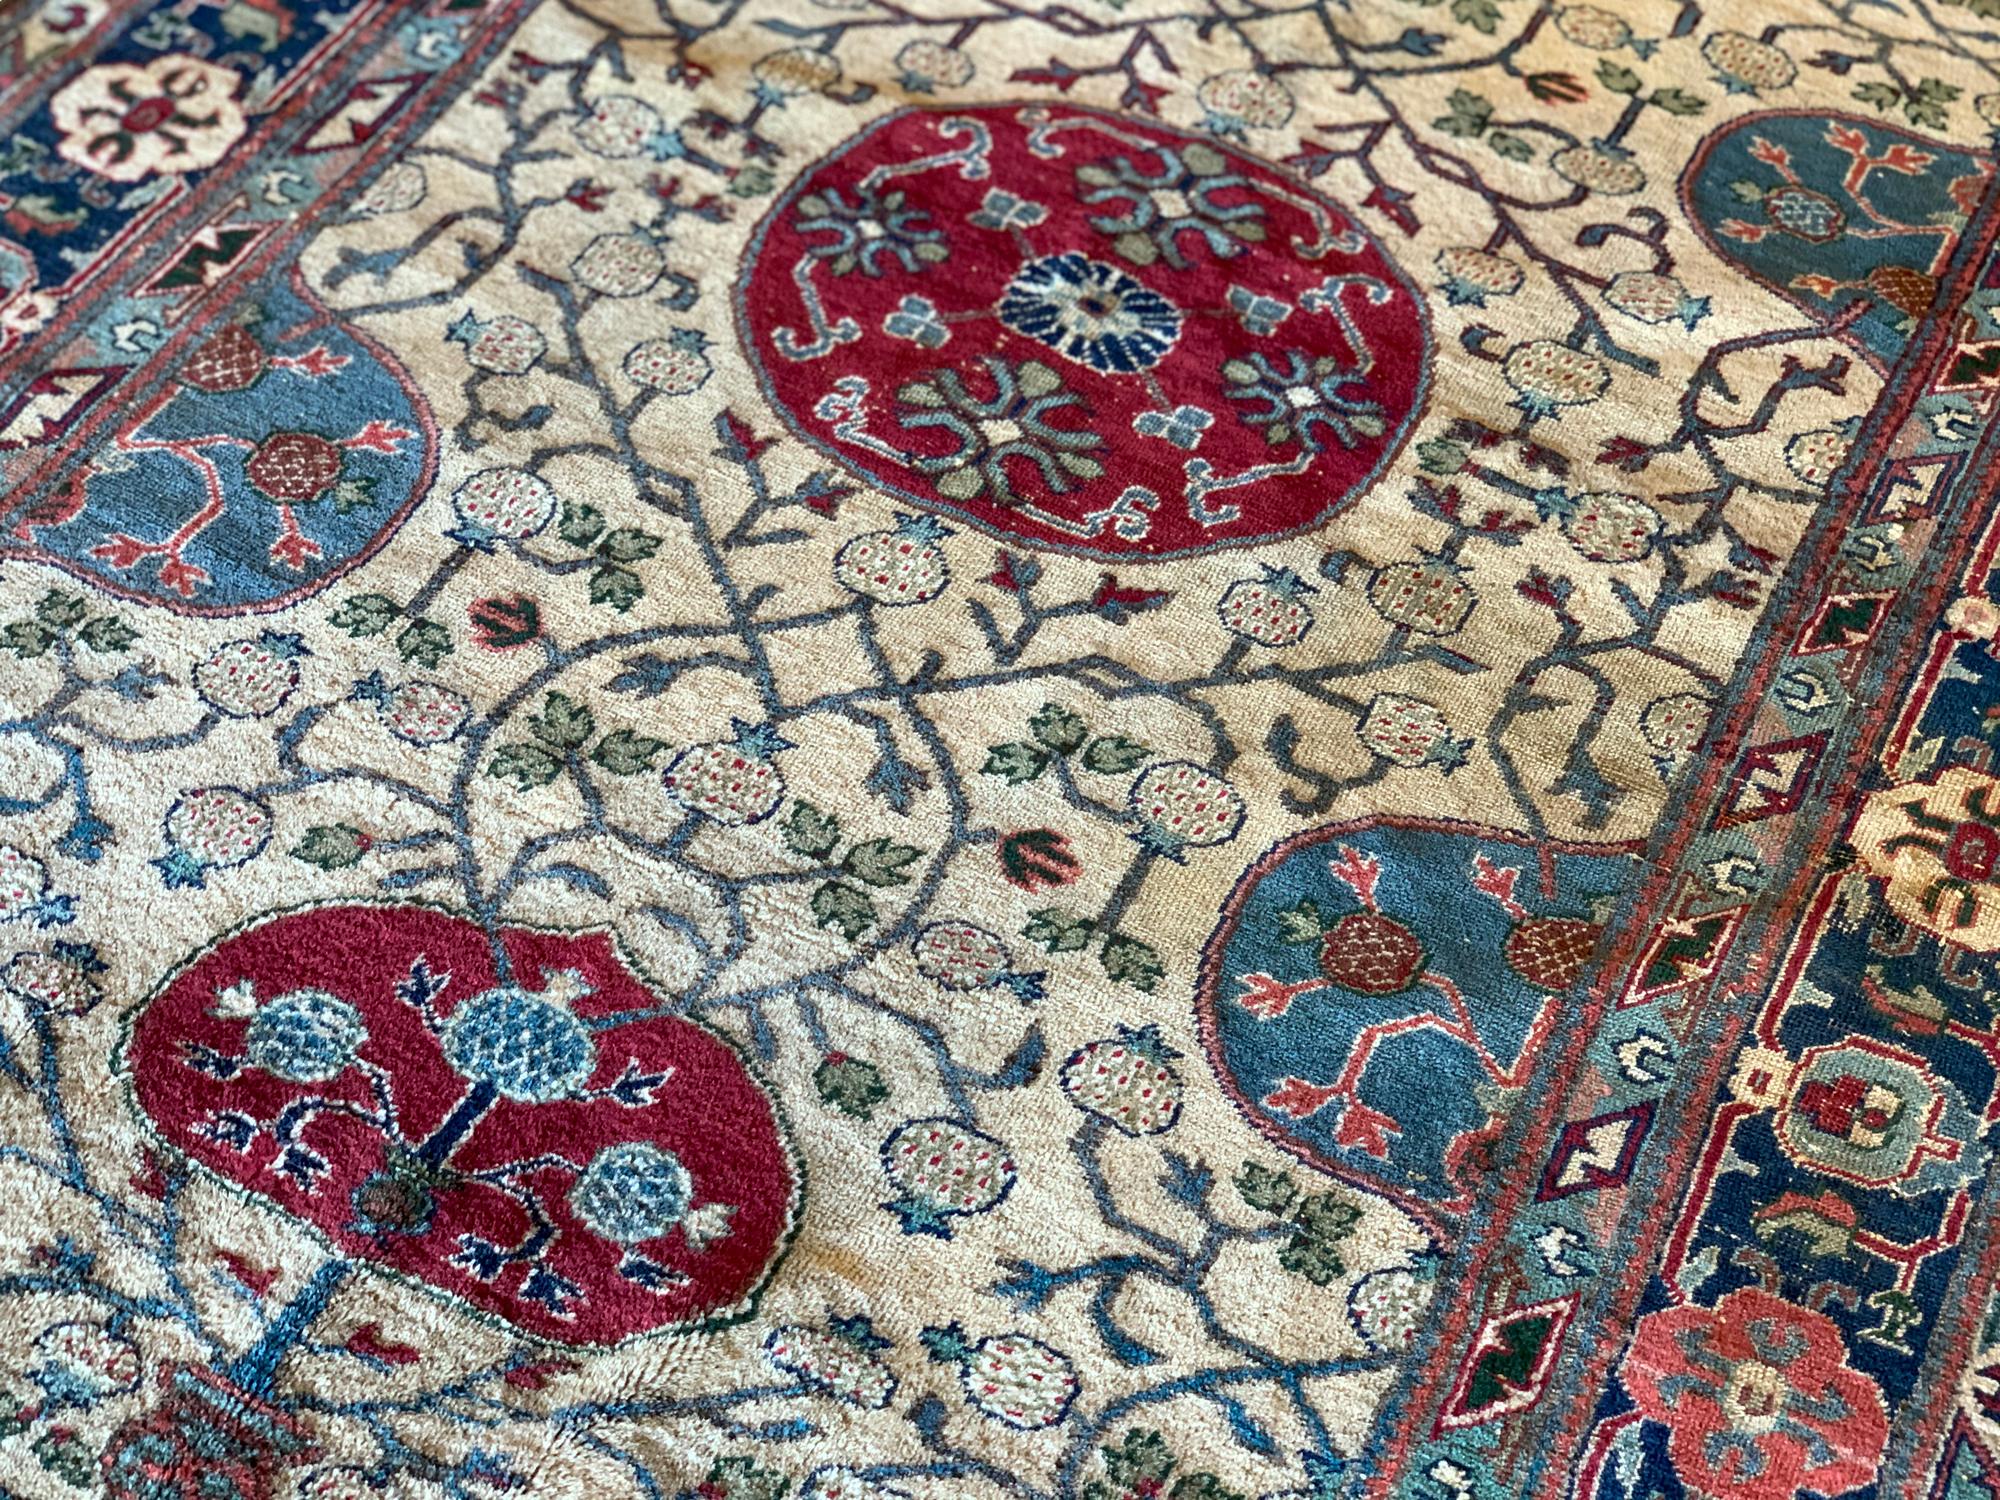 Woven Antique Rugs Central Asian Khotan Carpet Handmade Oriental Area Rug For Sale